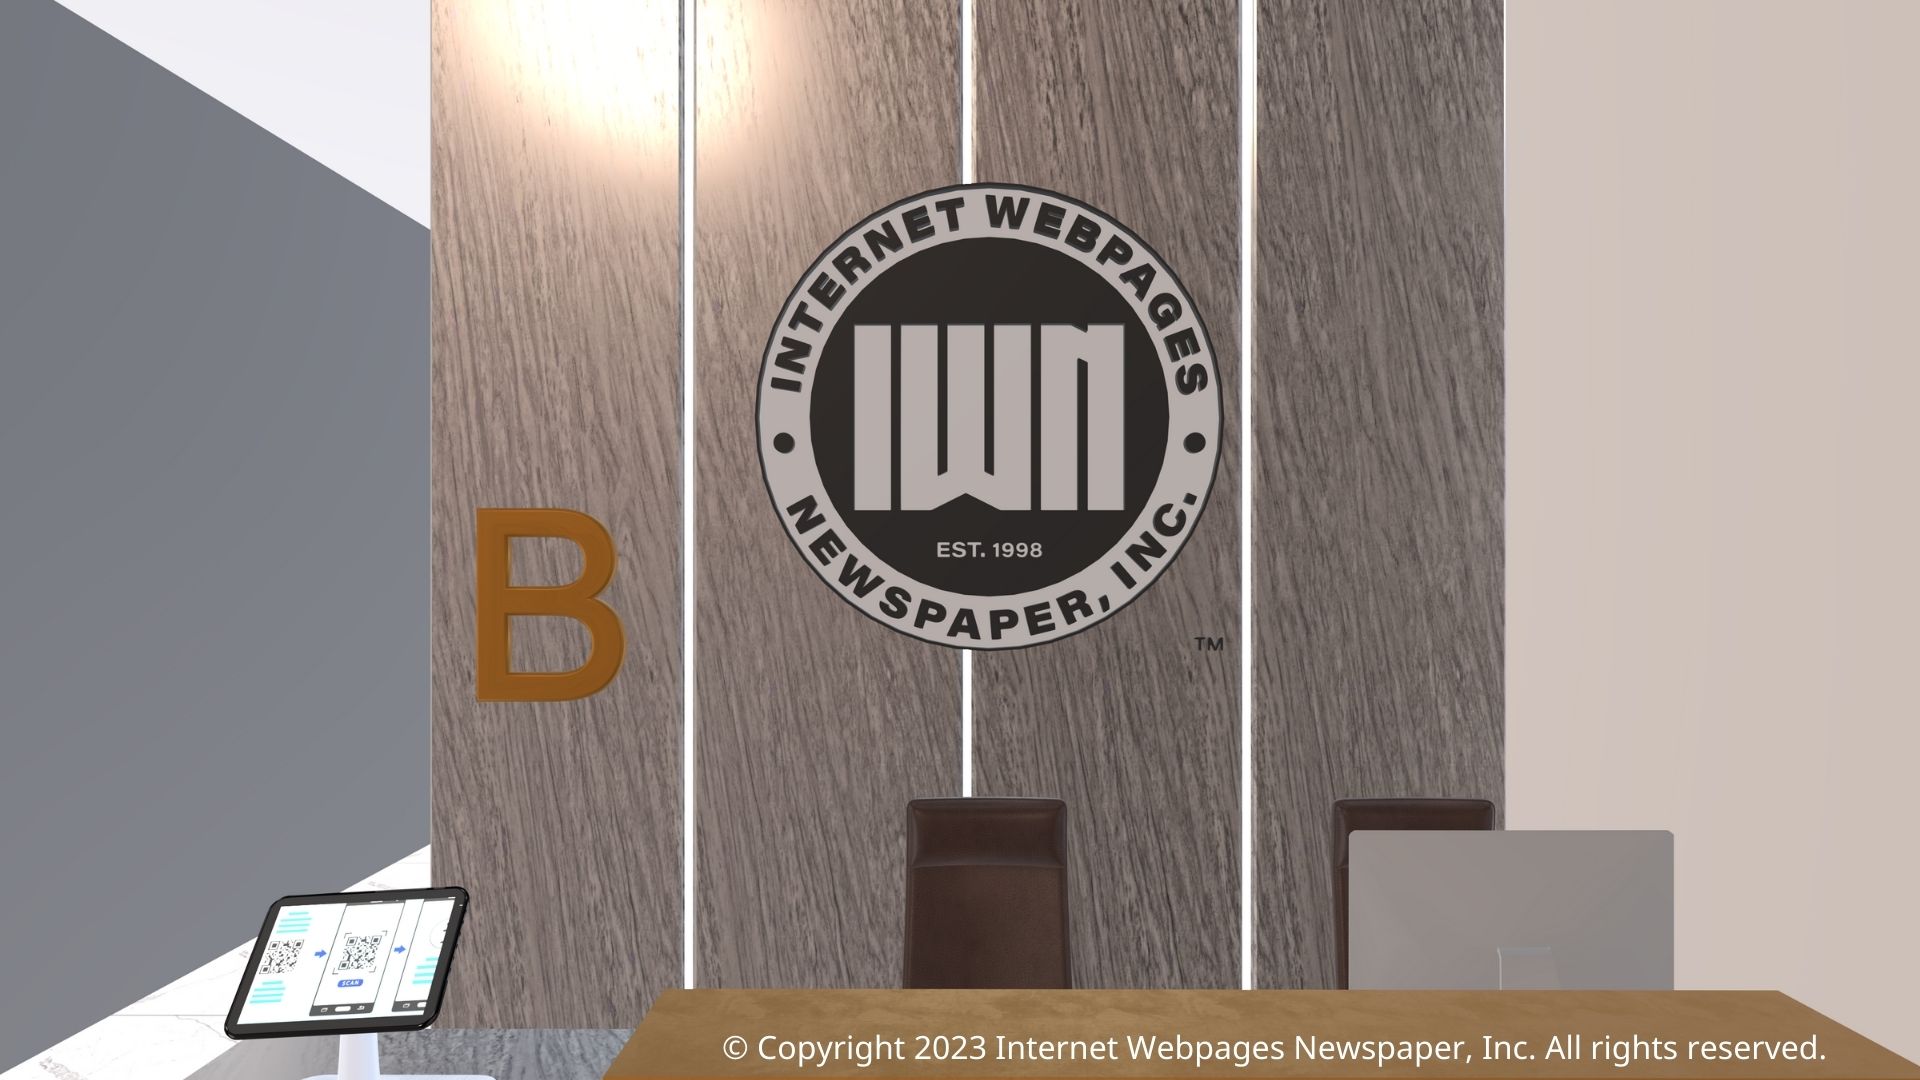 Internet Webpages Newspaper, Inc. (IWN) Headquarters